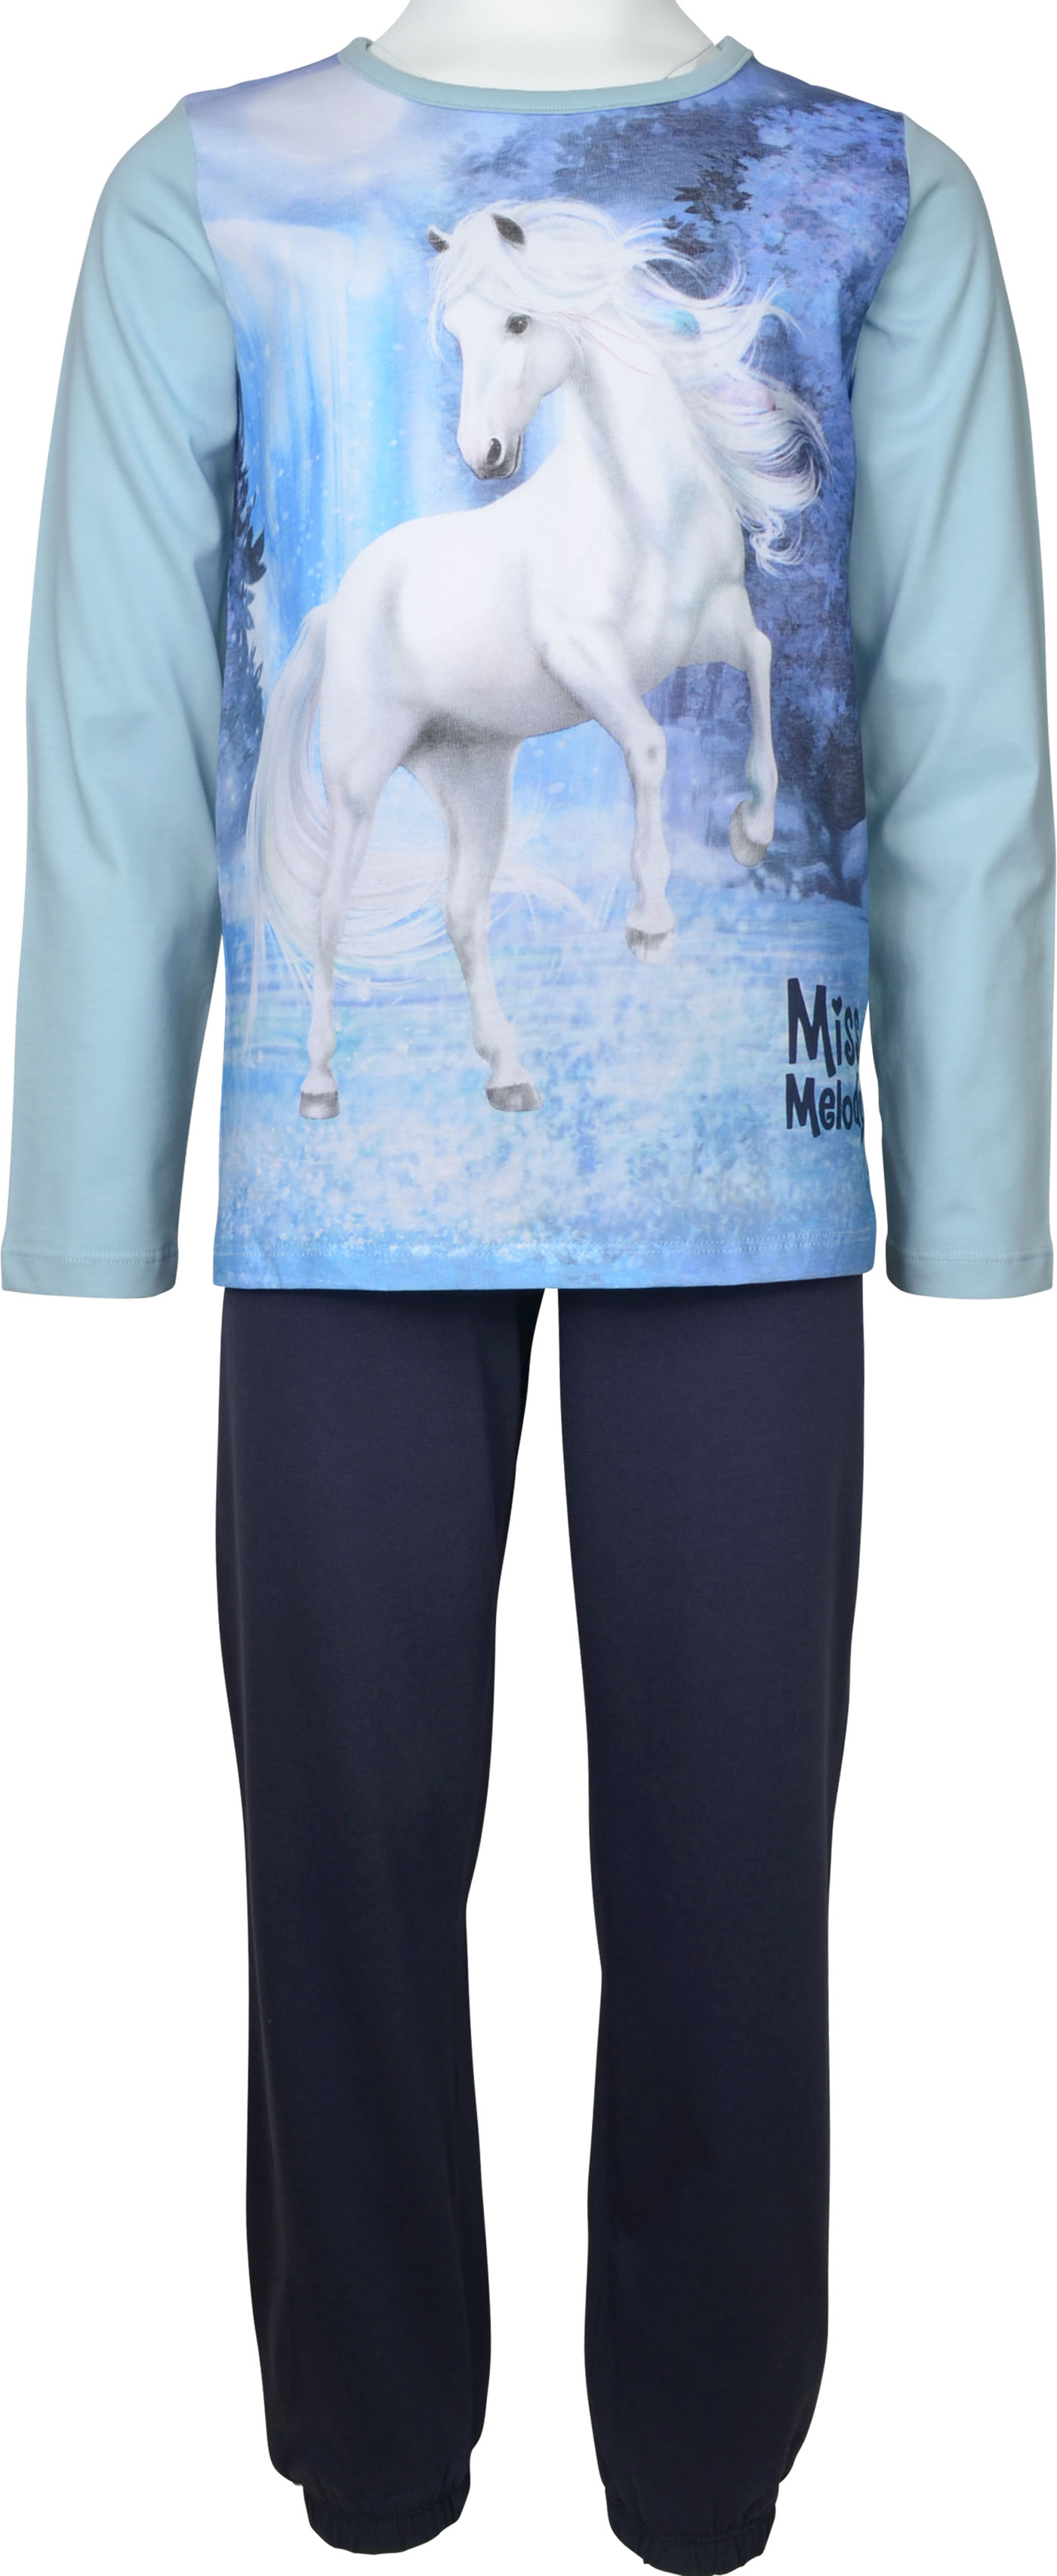 Miss Melody Pyjama long fog online at DREAM sleeve shop HORSE lavender